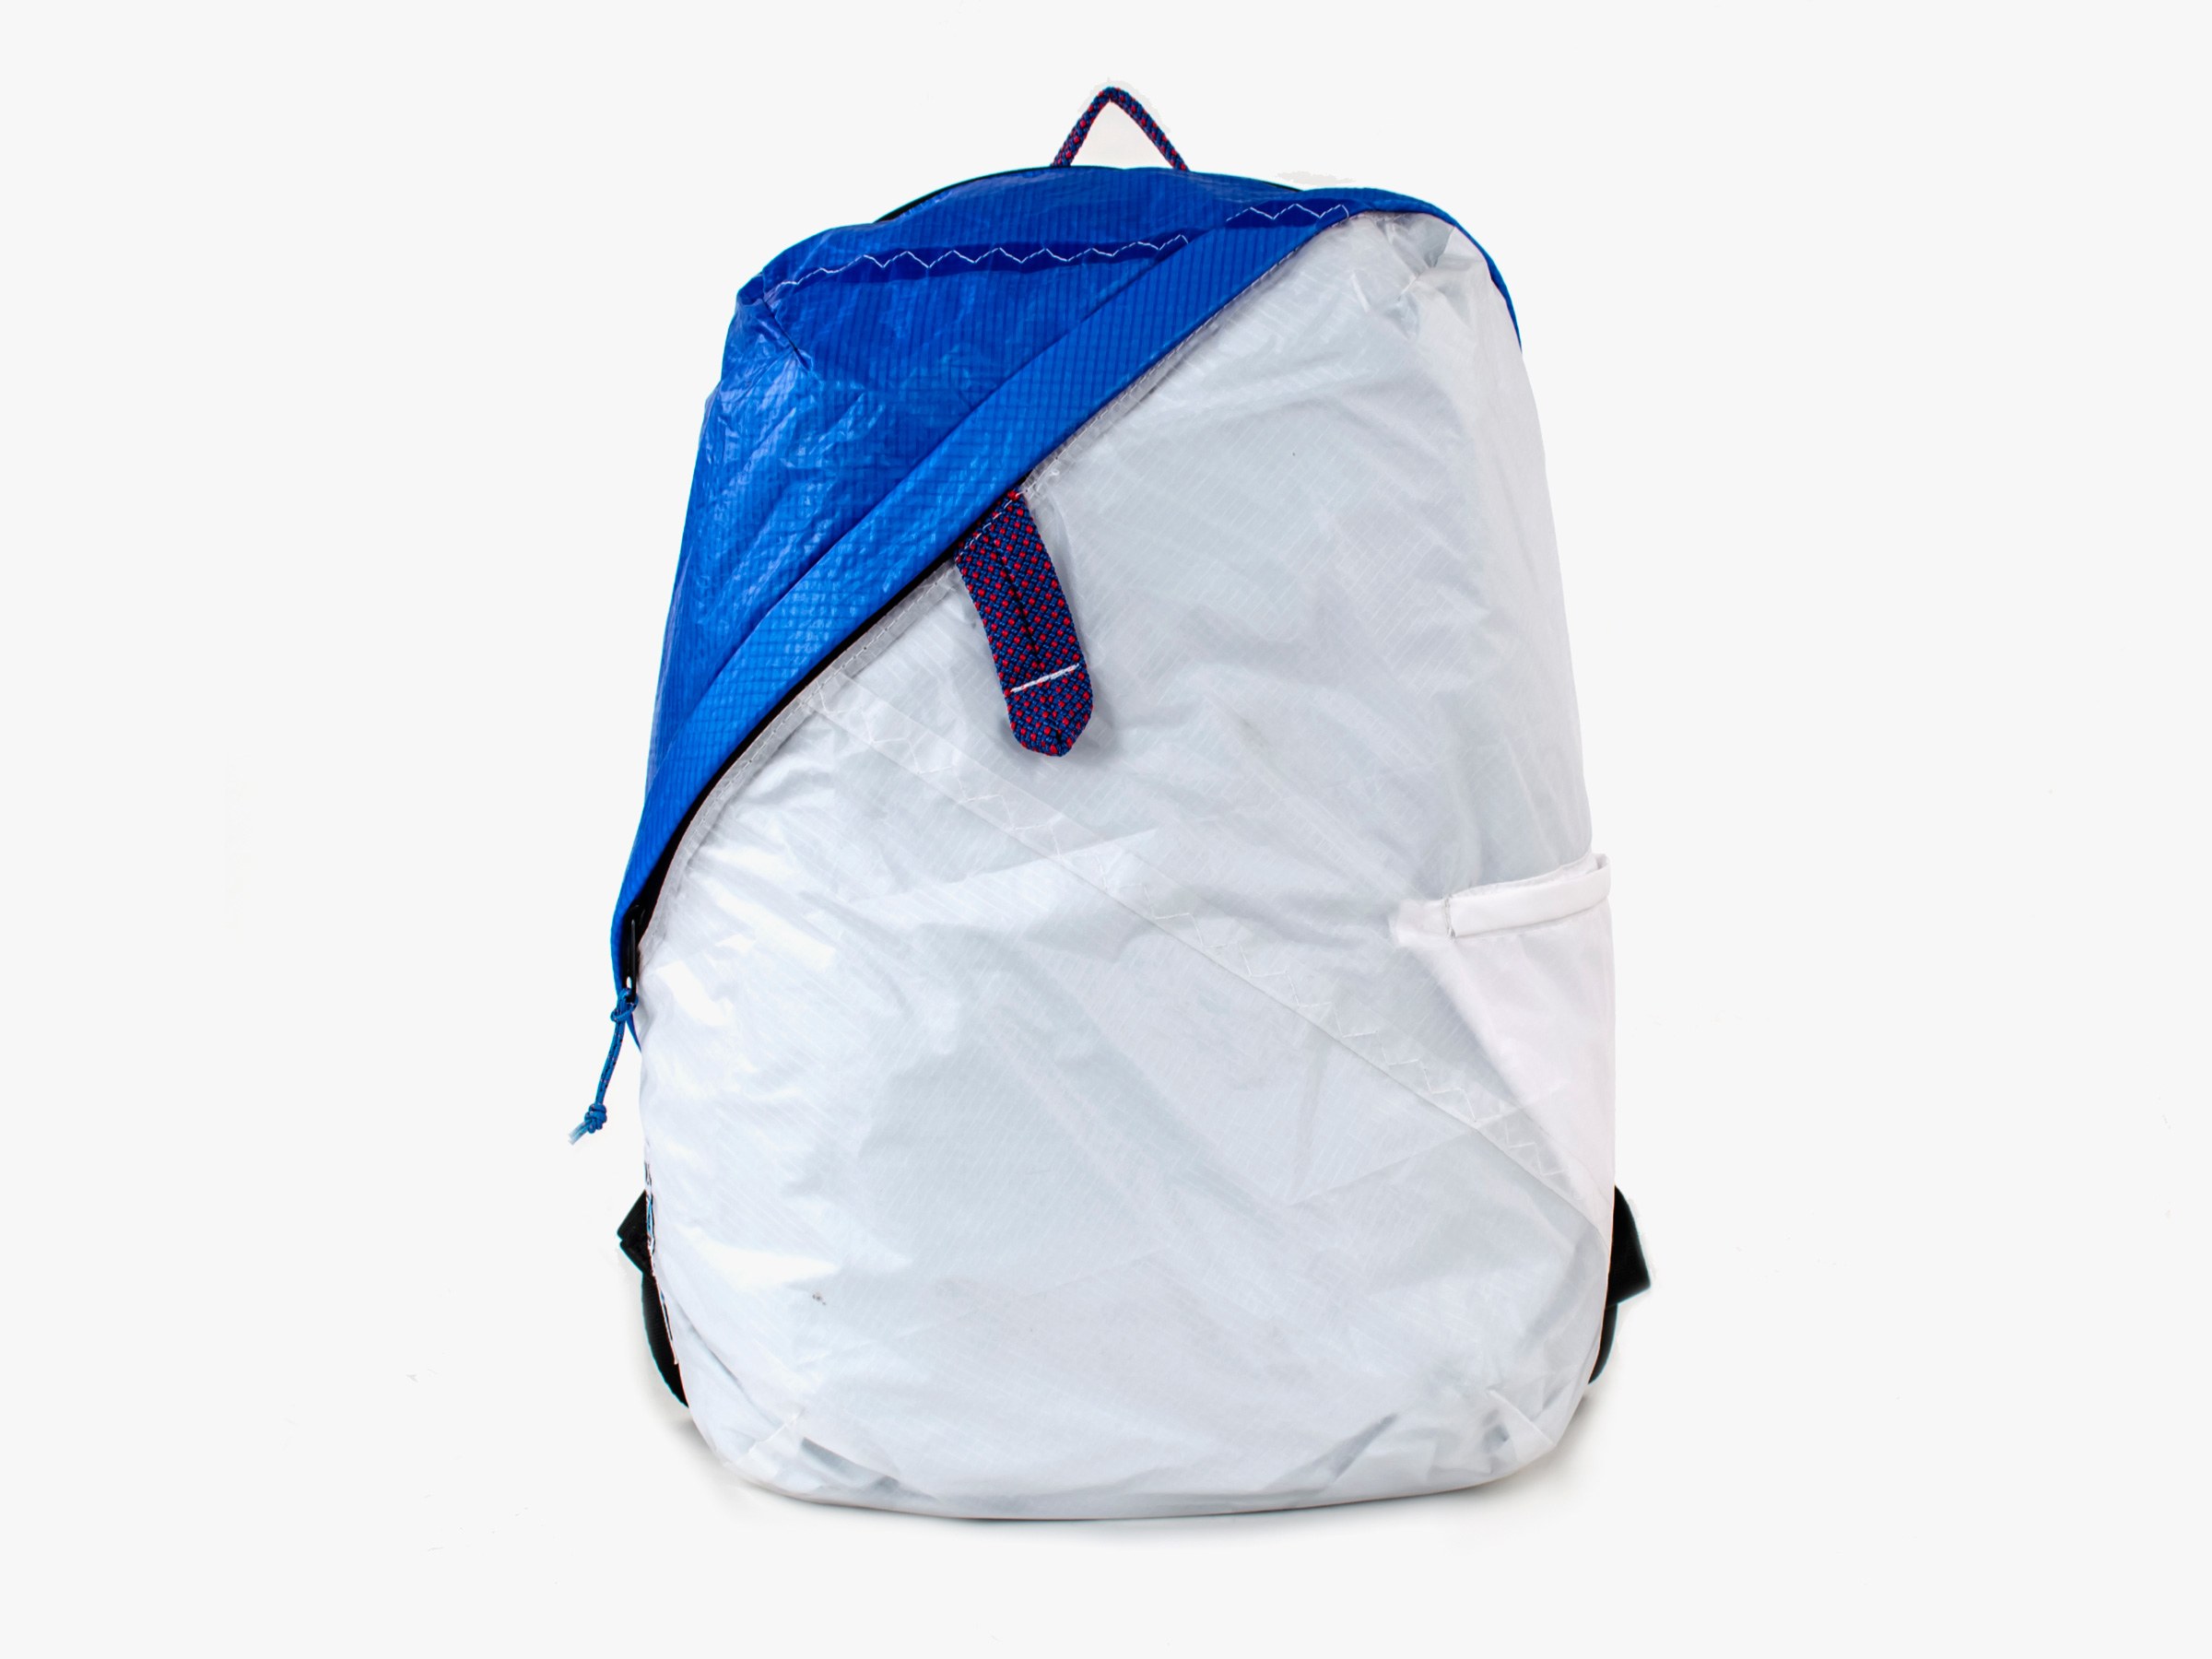 Mafia Deep Blue Bag Review: A Lightweight Hiking Bag With a ...